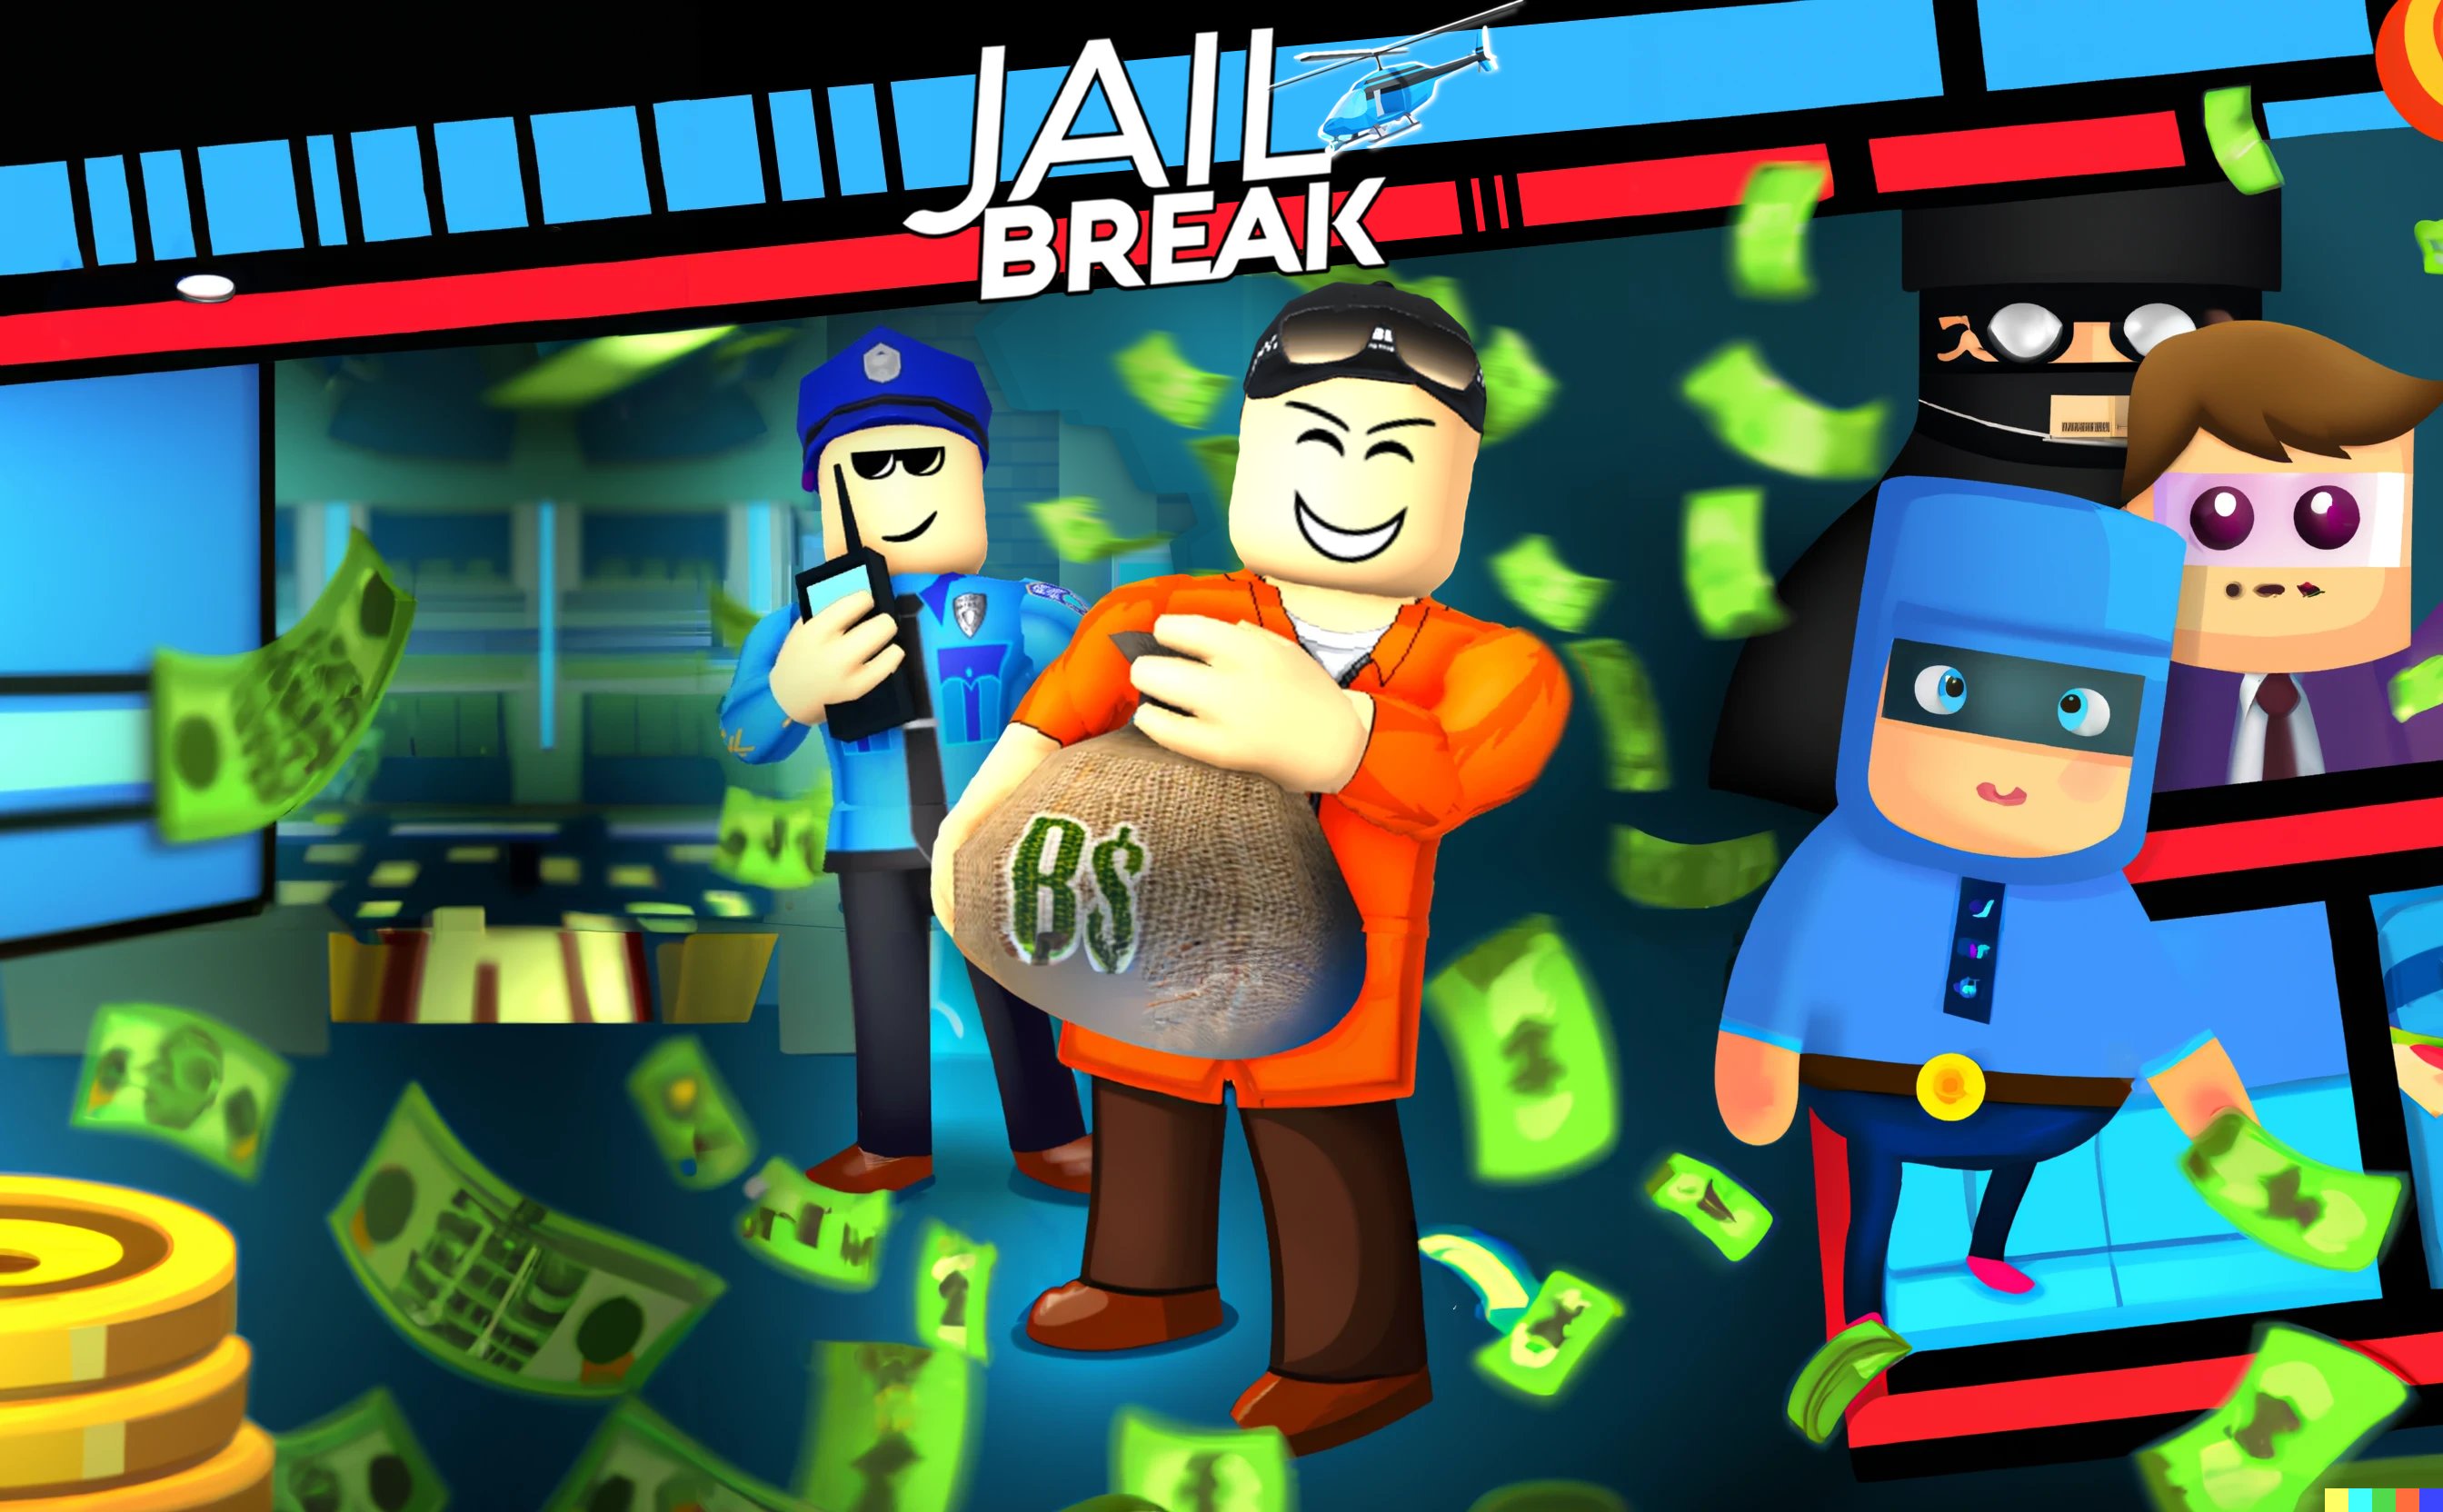 Jailbreak Game Icon by IDontHaveAUse on DeviantArt